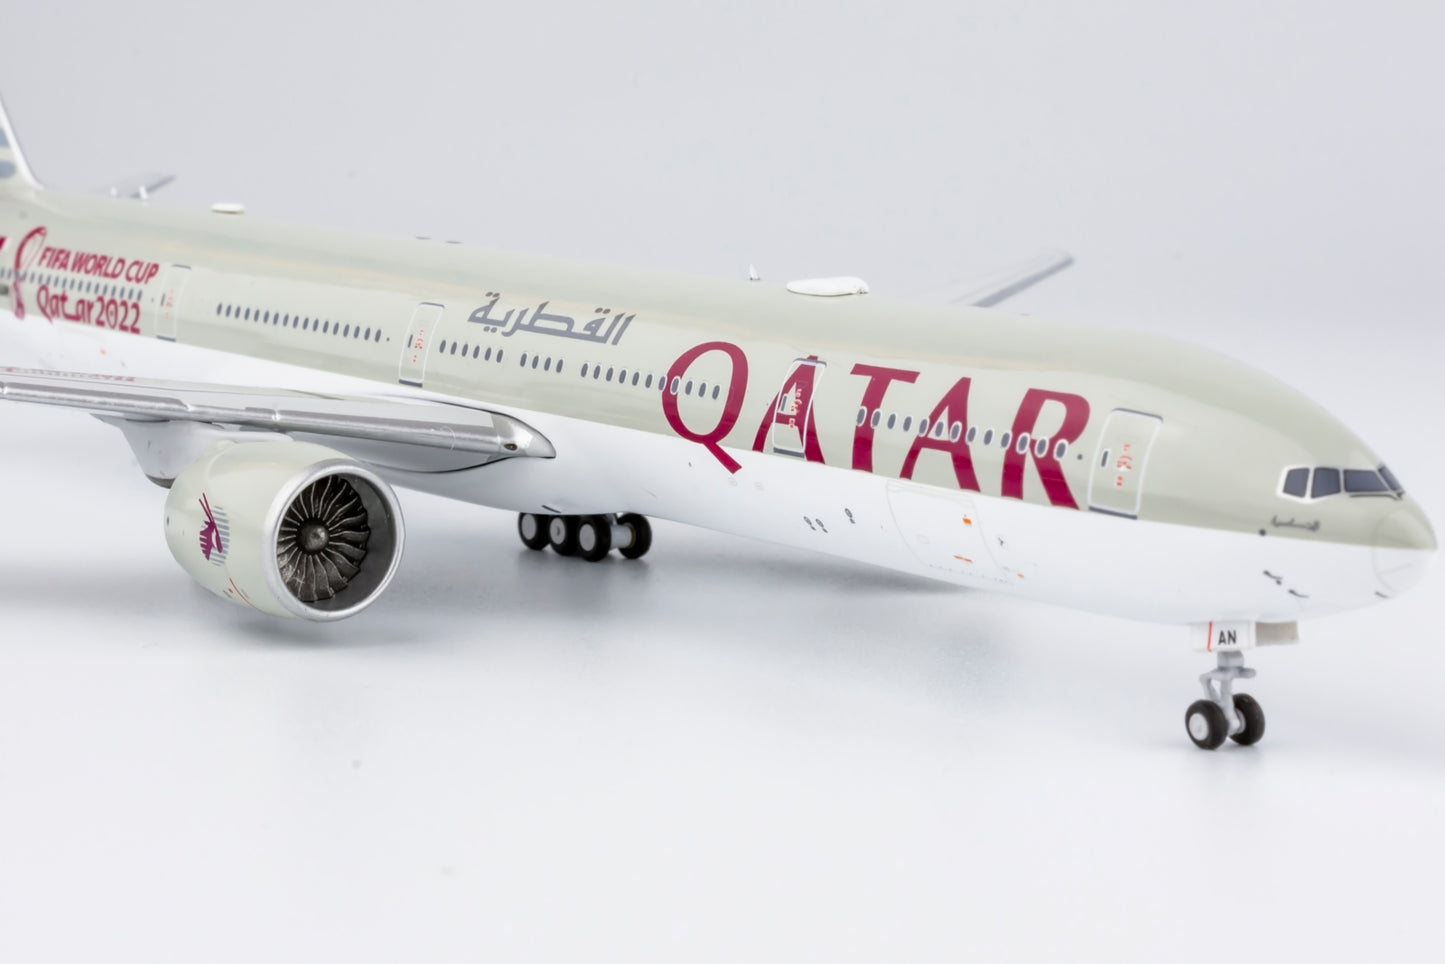 1/400 Qatar Airways B 777-300ER "FIFA World Cup Qatar 2022" NG Models 73026